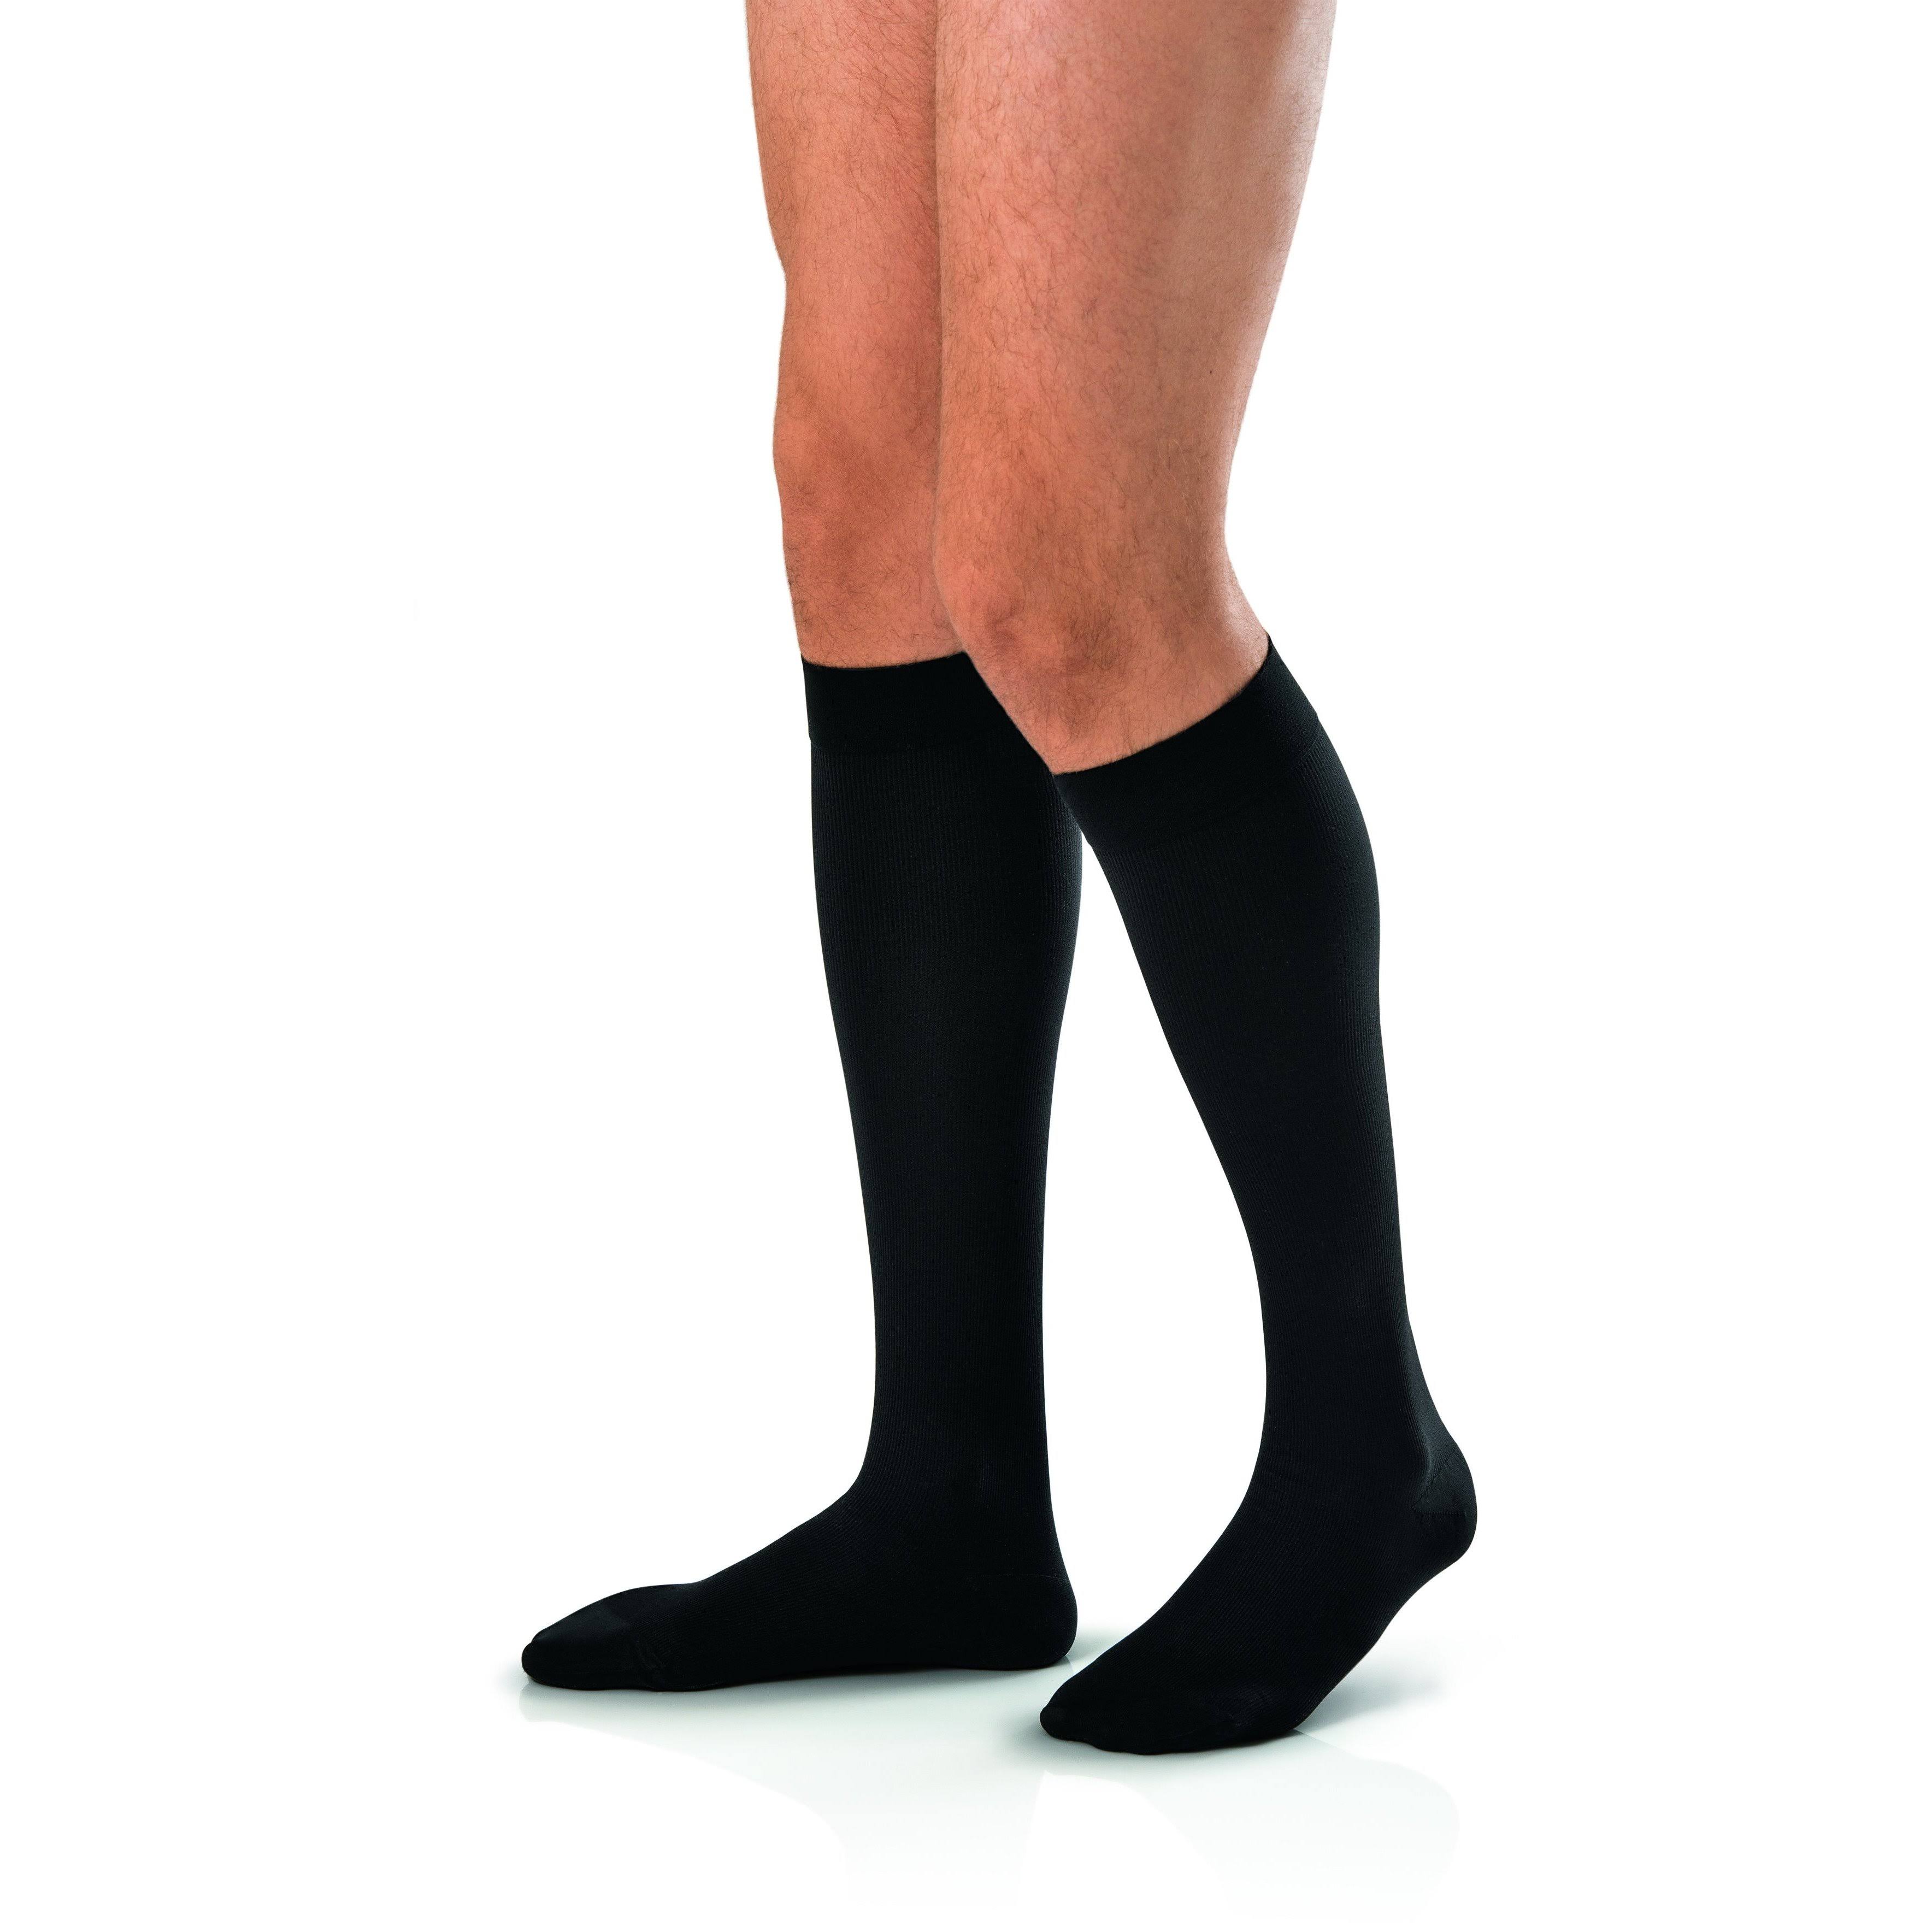 Jobst Men Medical Legwear Knee High Socks - Black, X-Large